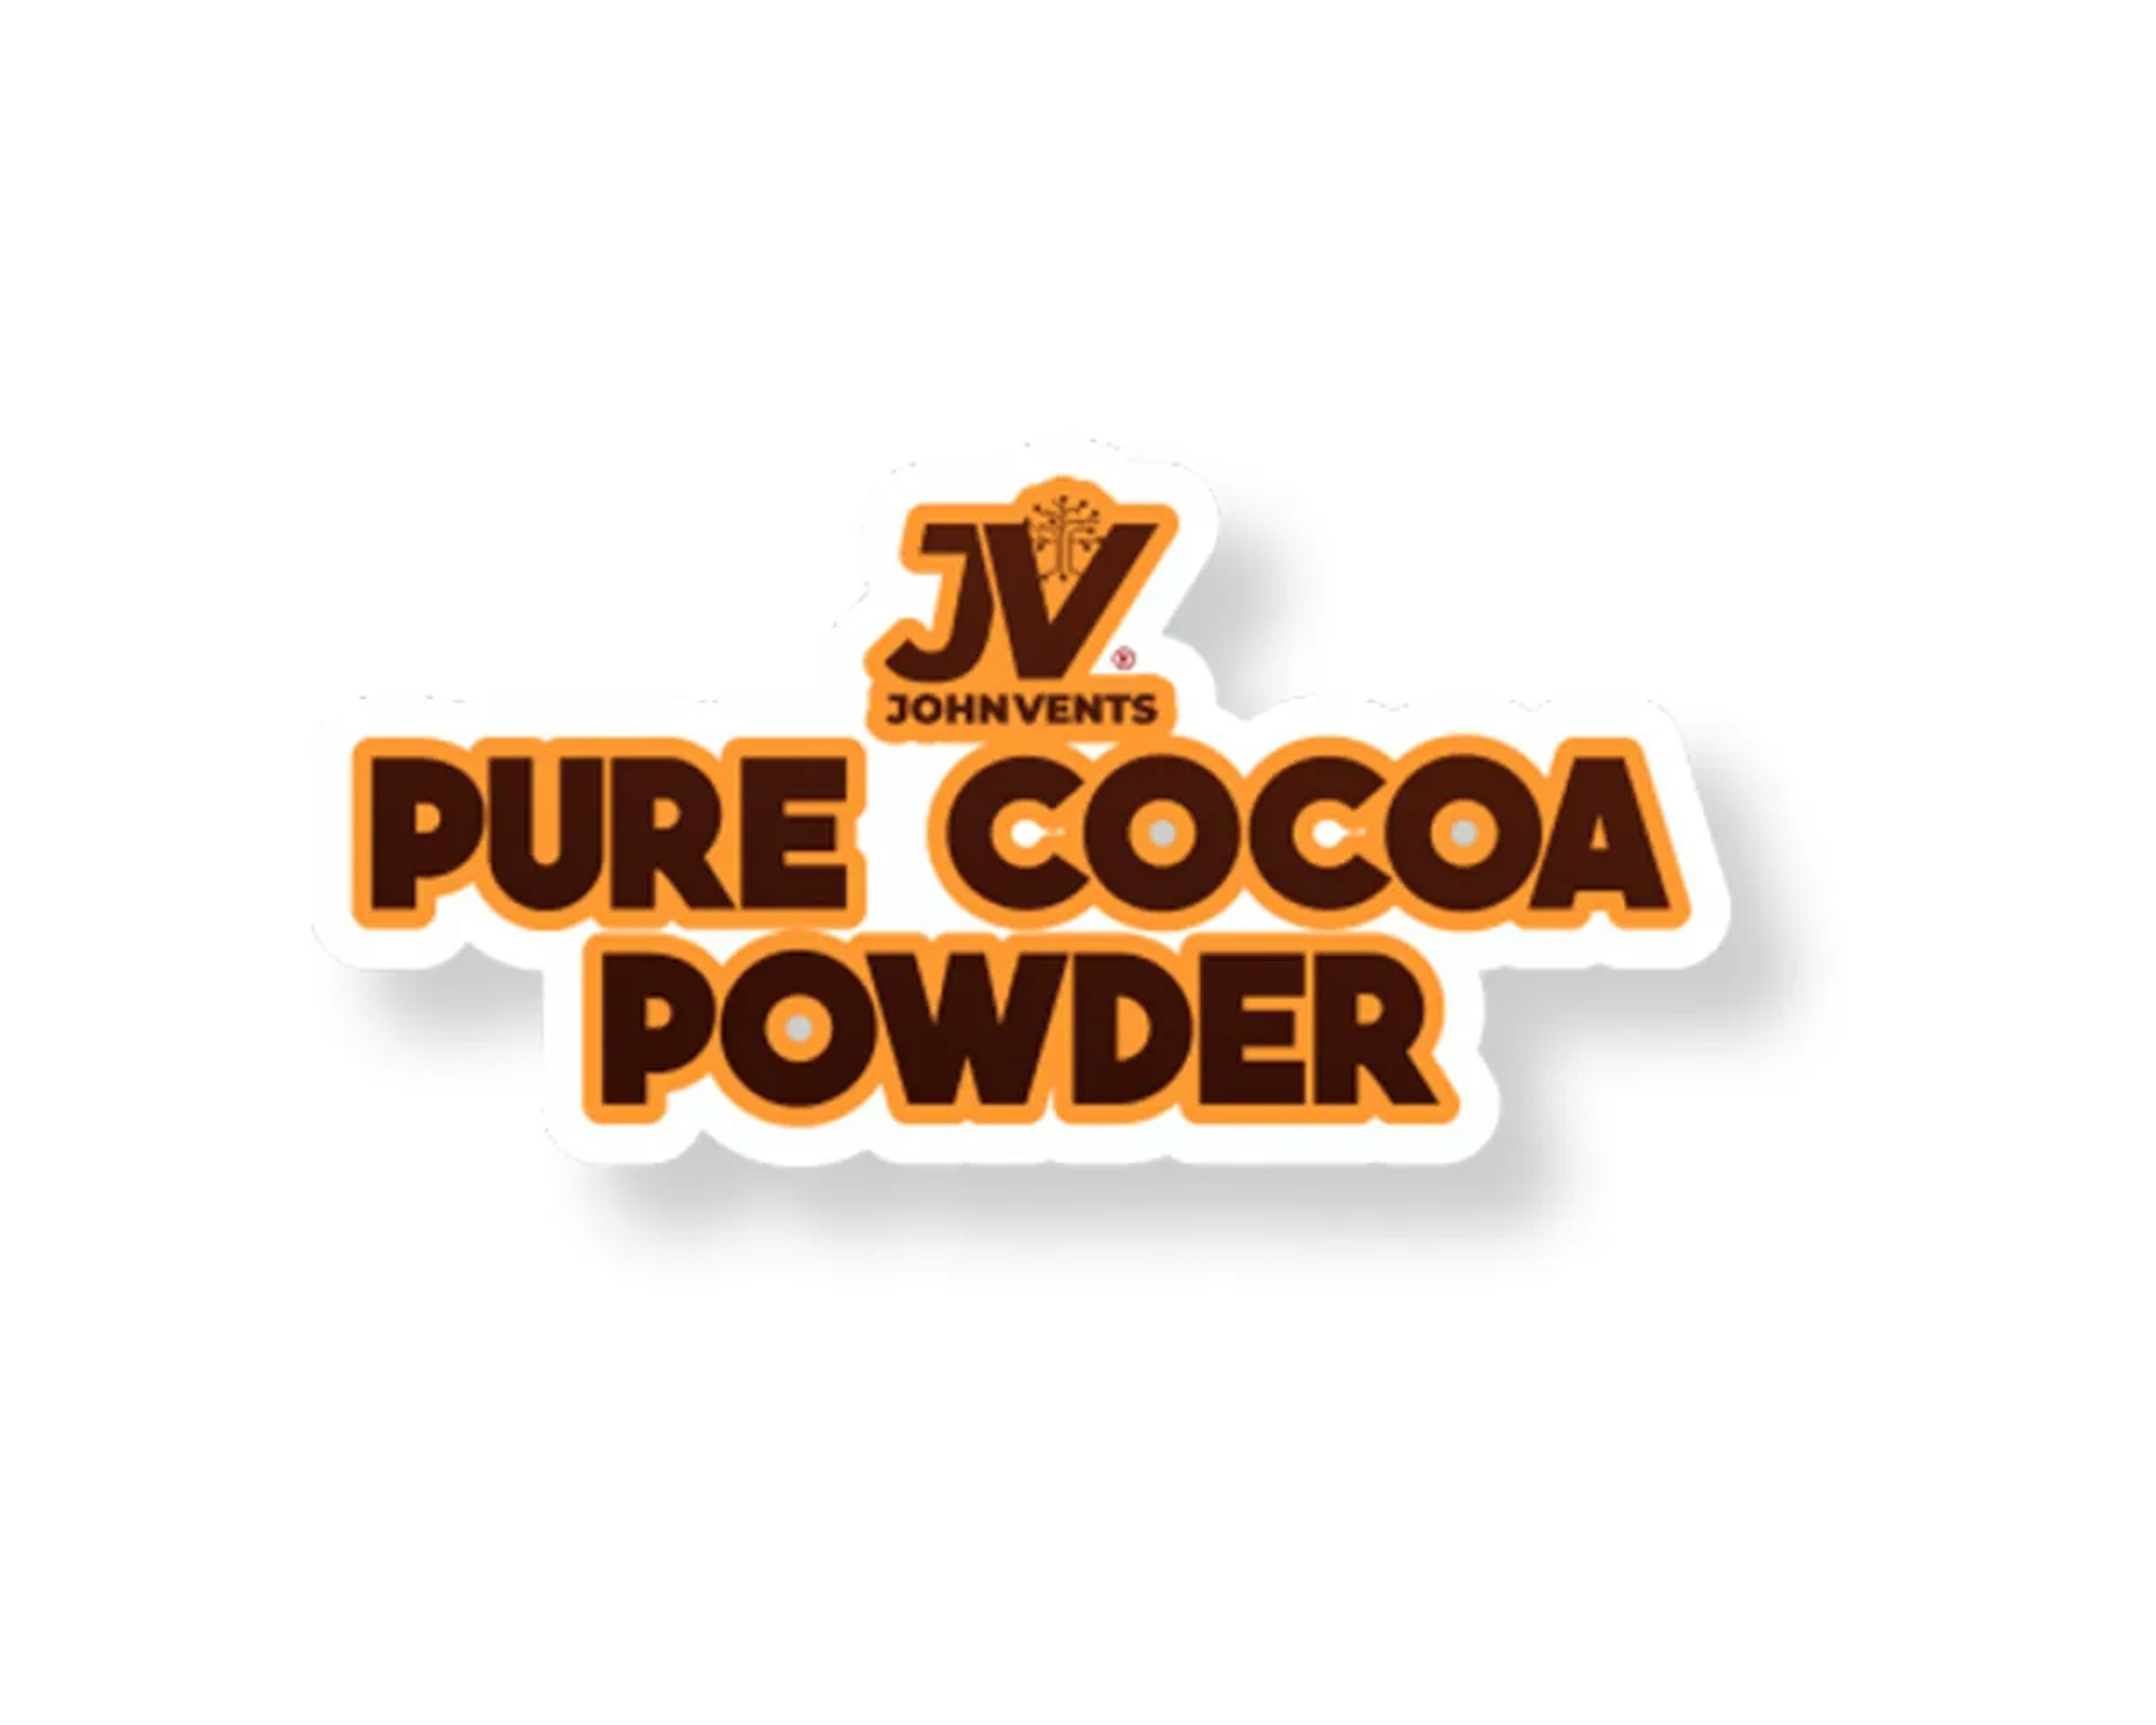 Johnvents Pure Cocoa Powder